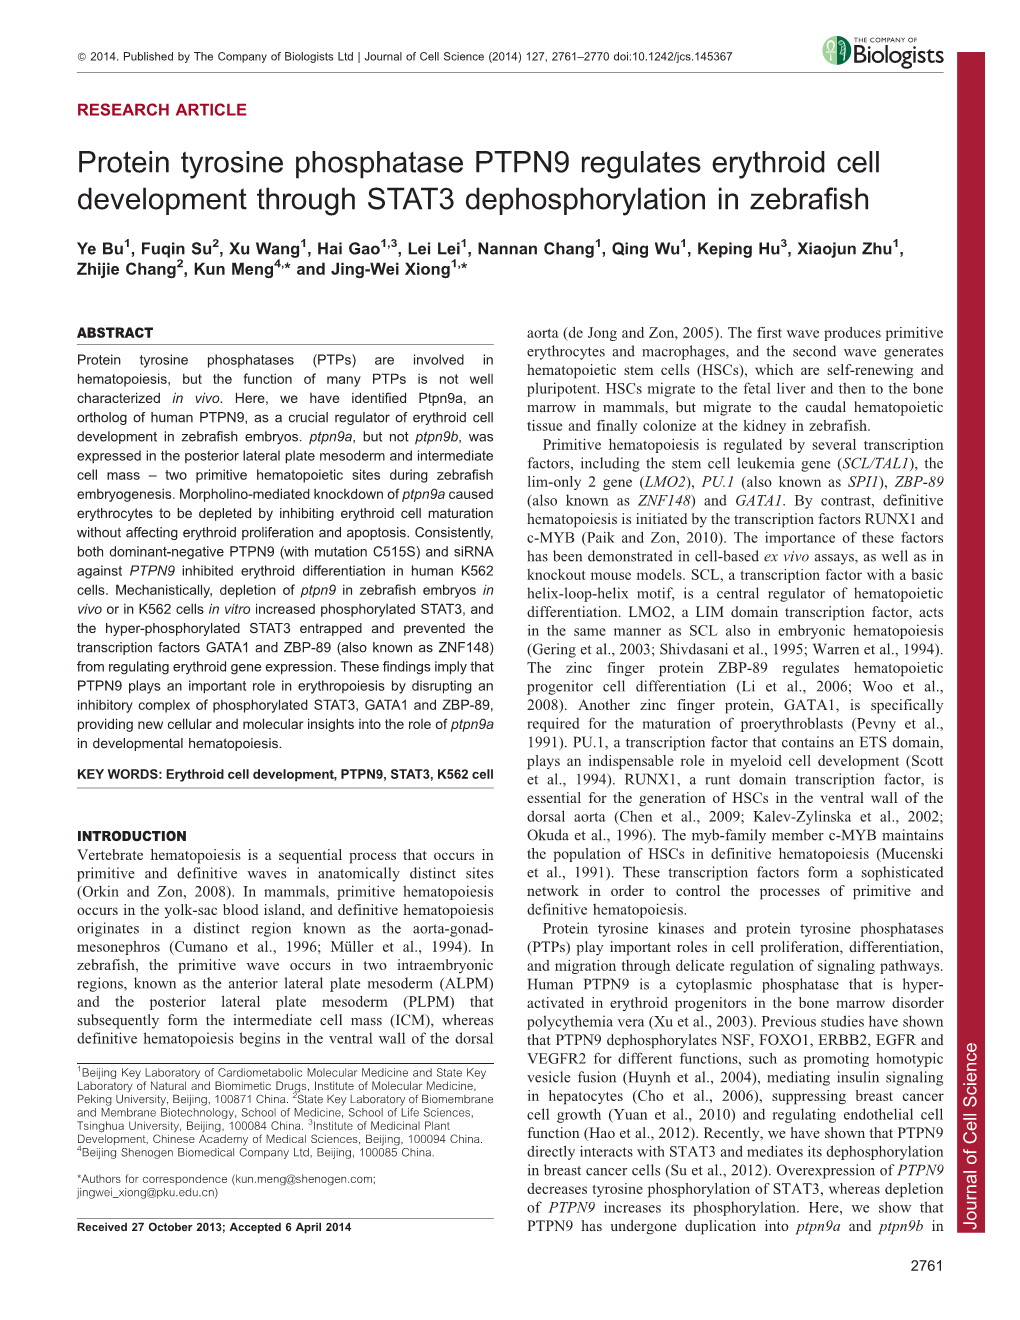 Protein Tyrosine Phosphatase PTPN9 Regulates Erythroid Cell